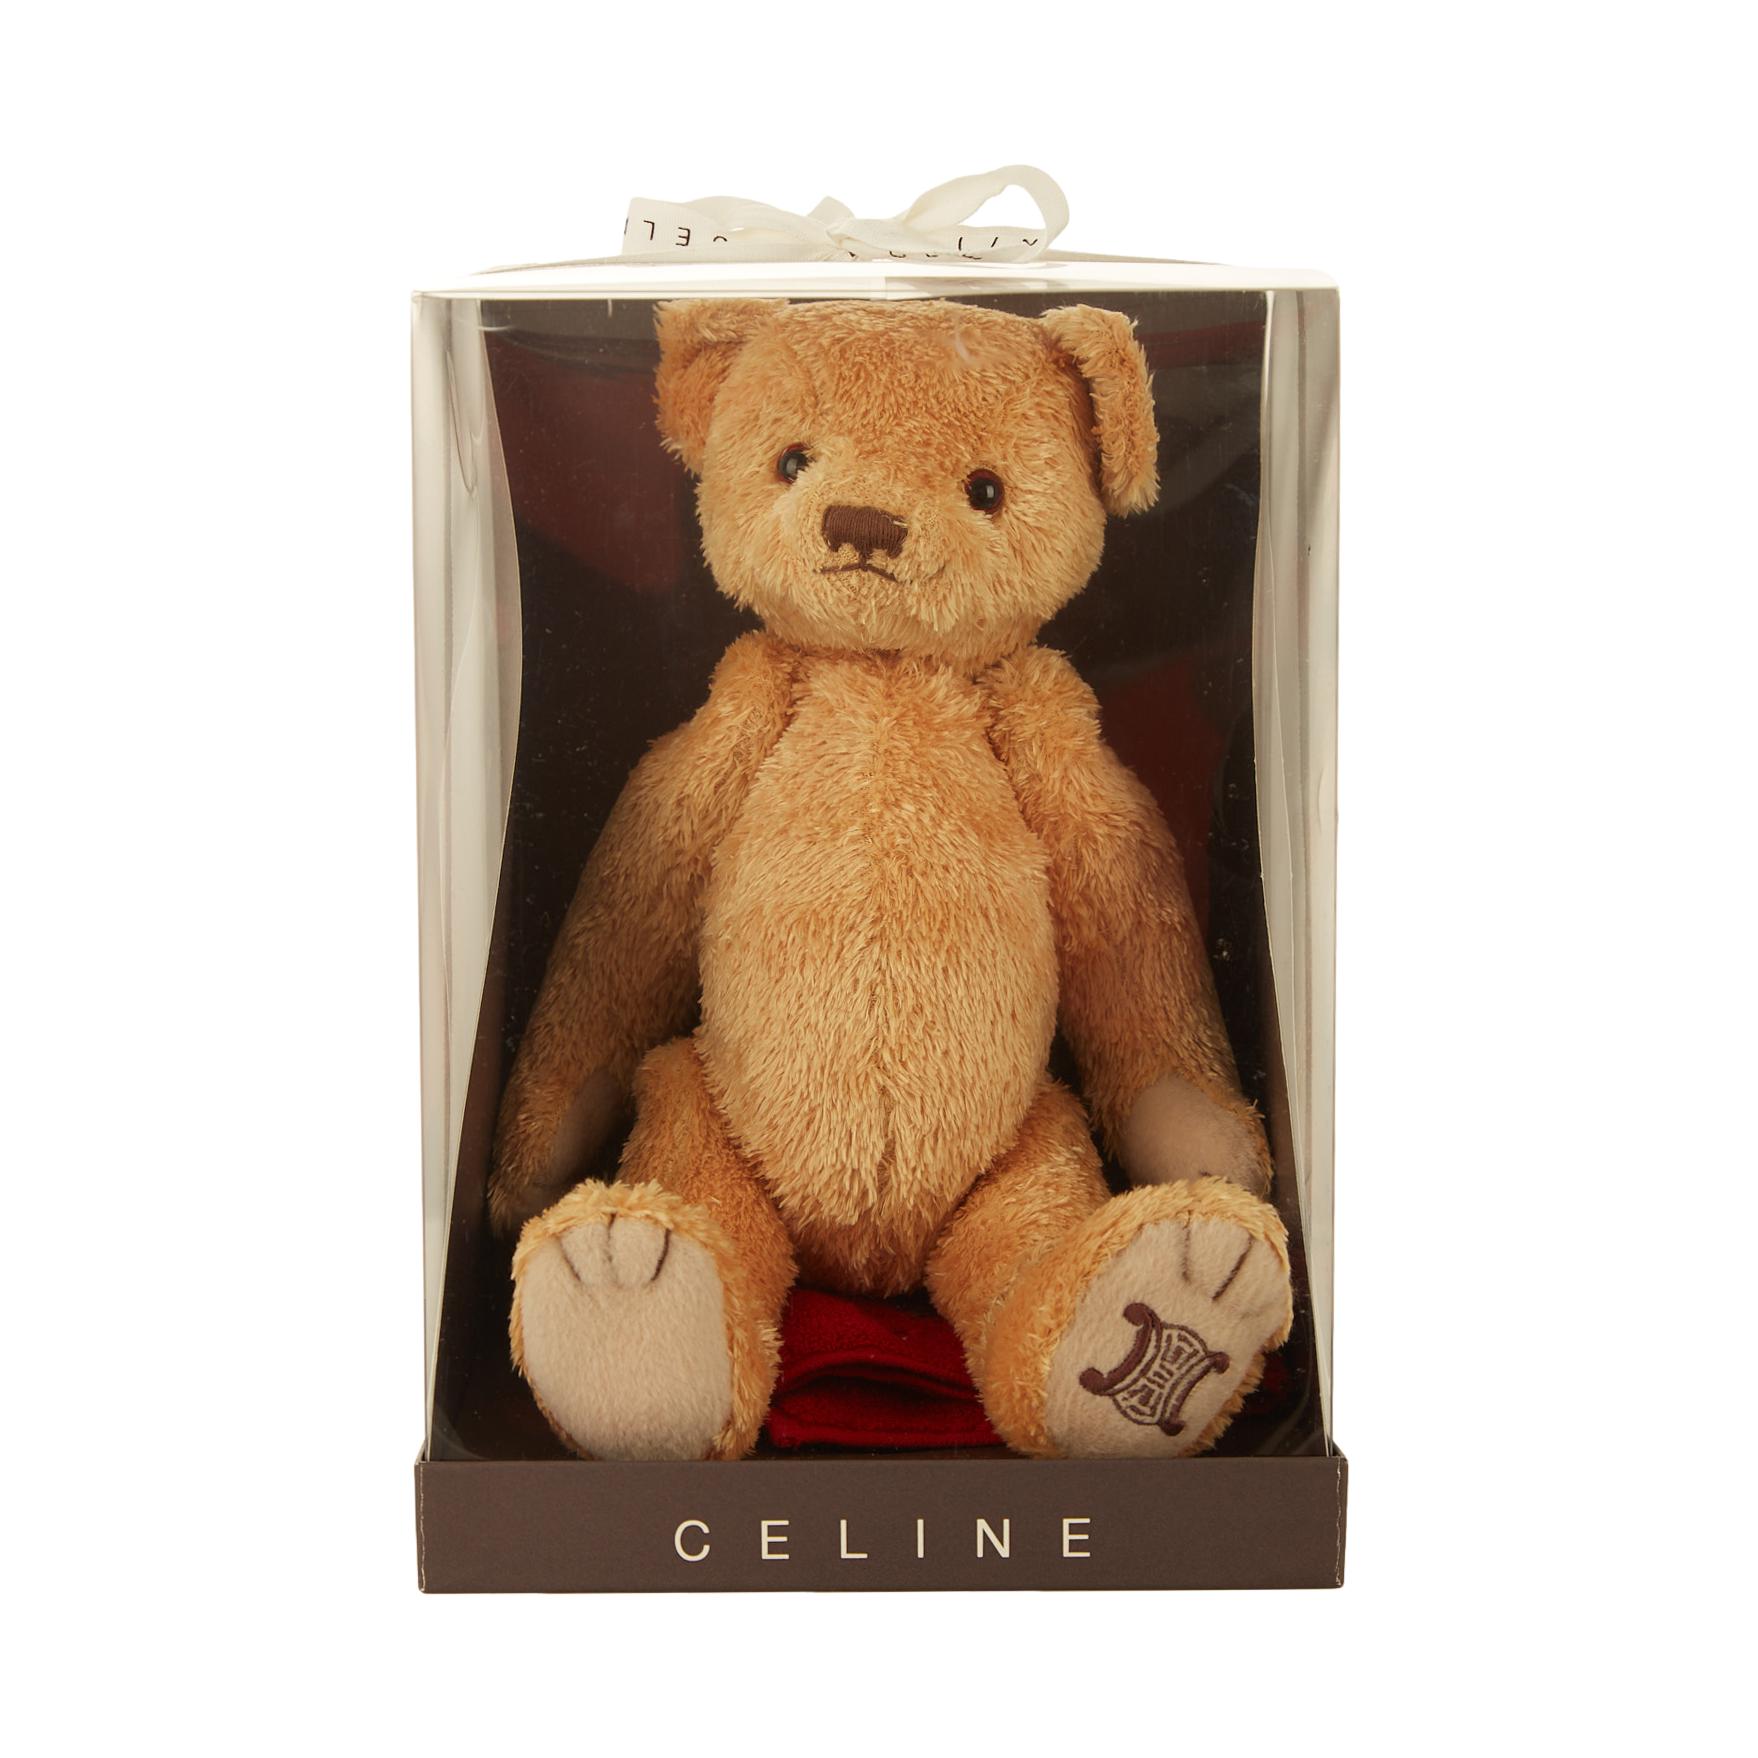 Celine Teddy Bear & Hand Towel Set